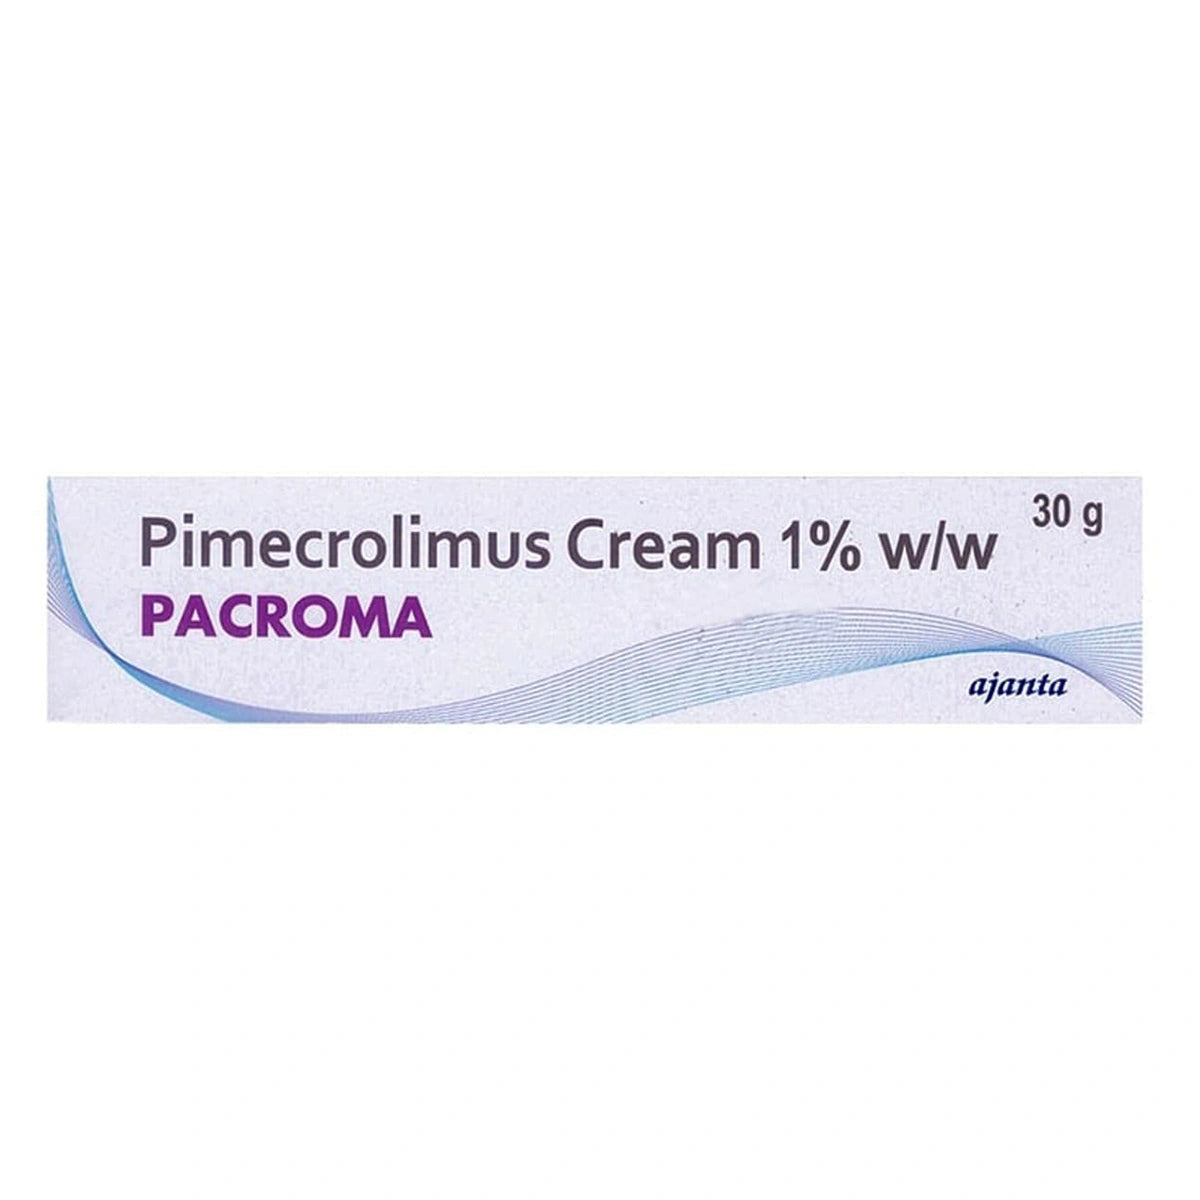 Pacroma cream 30gm